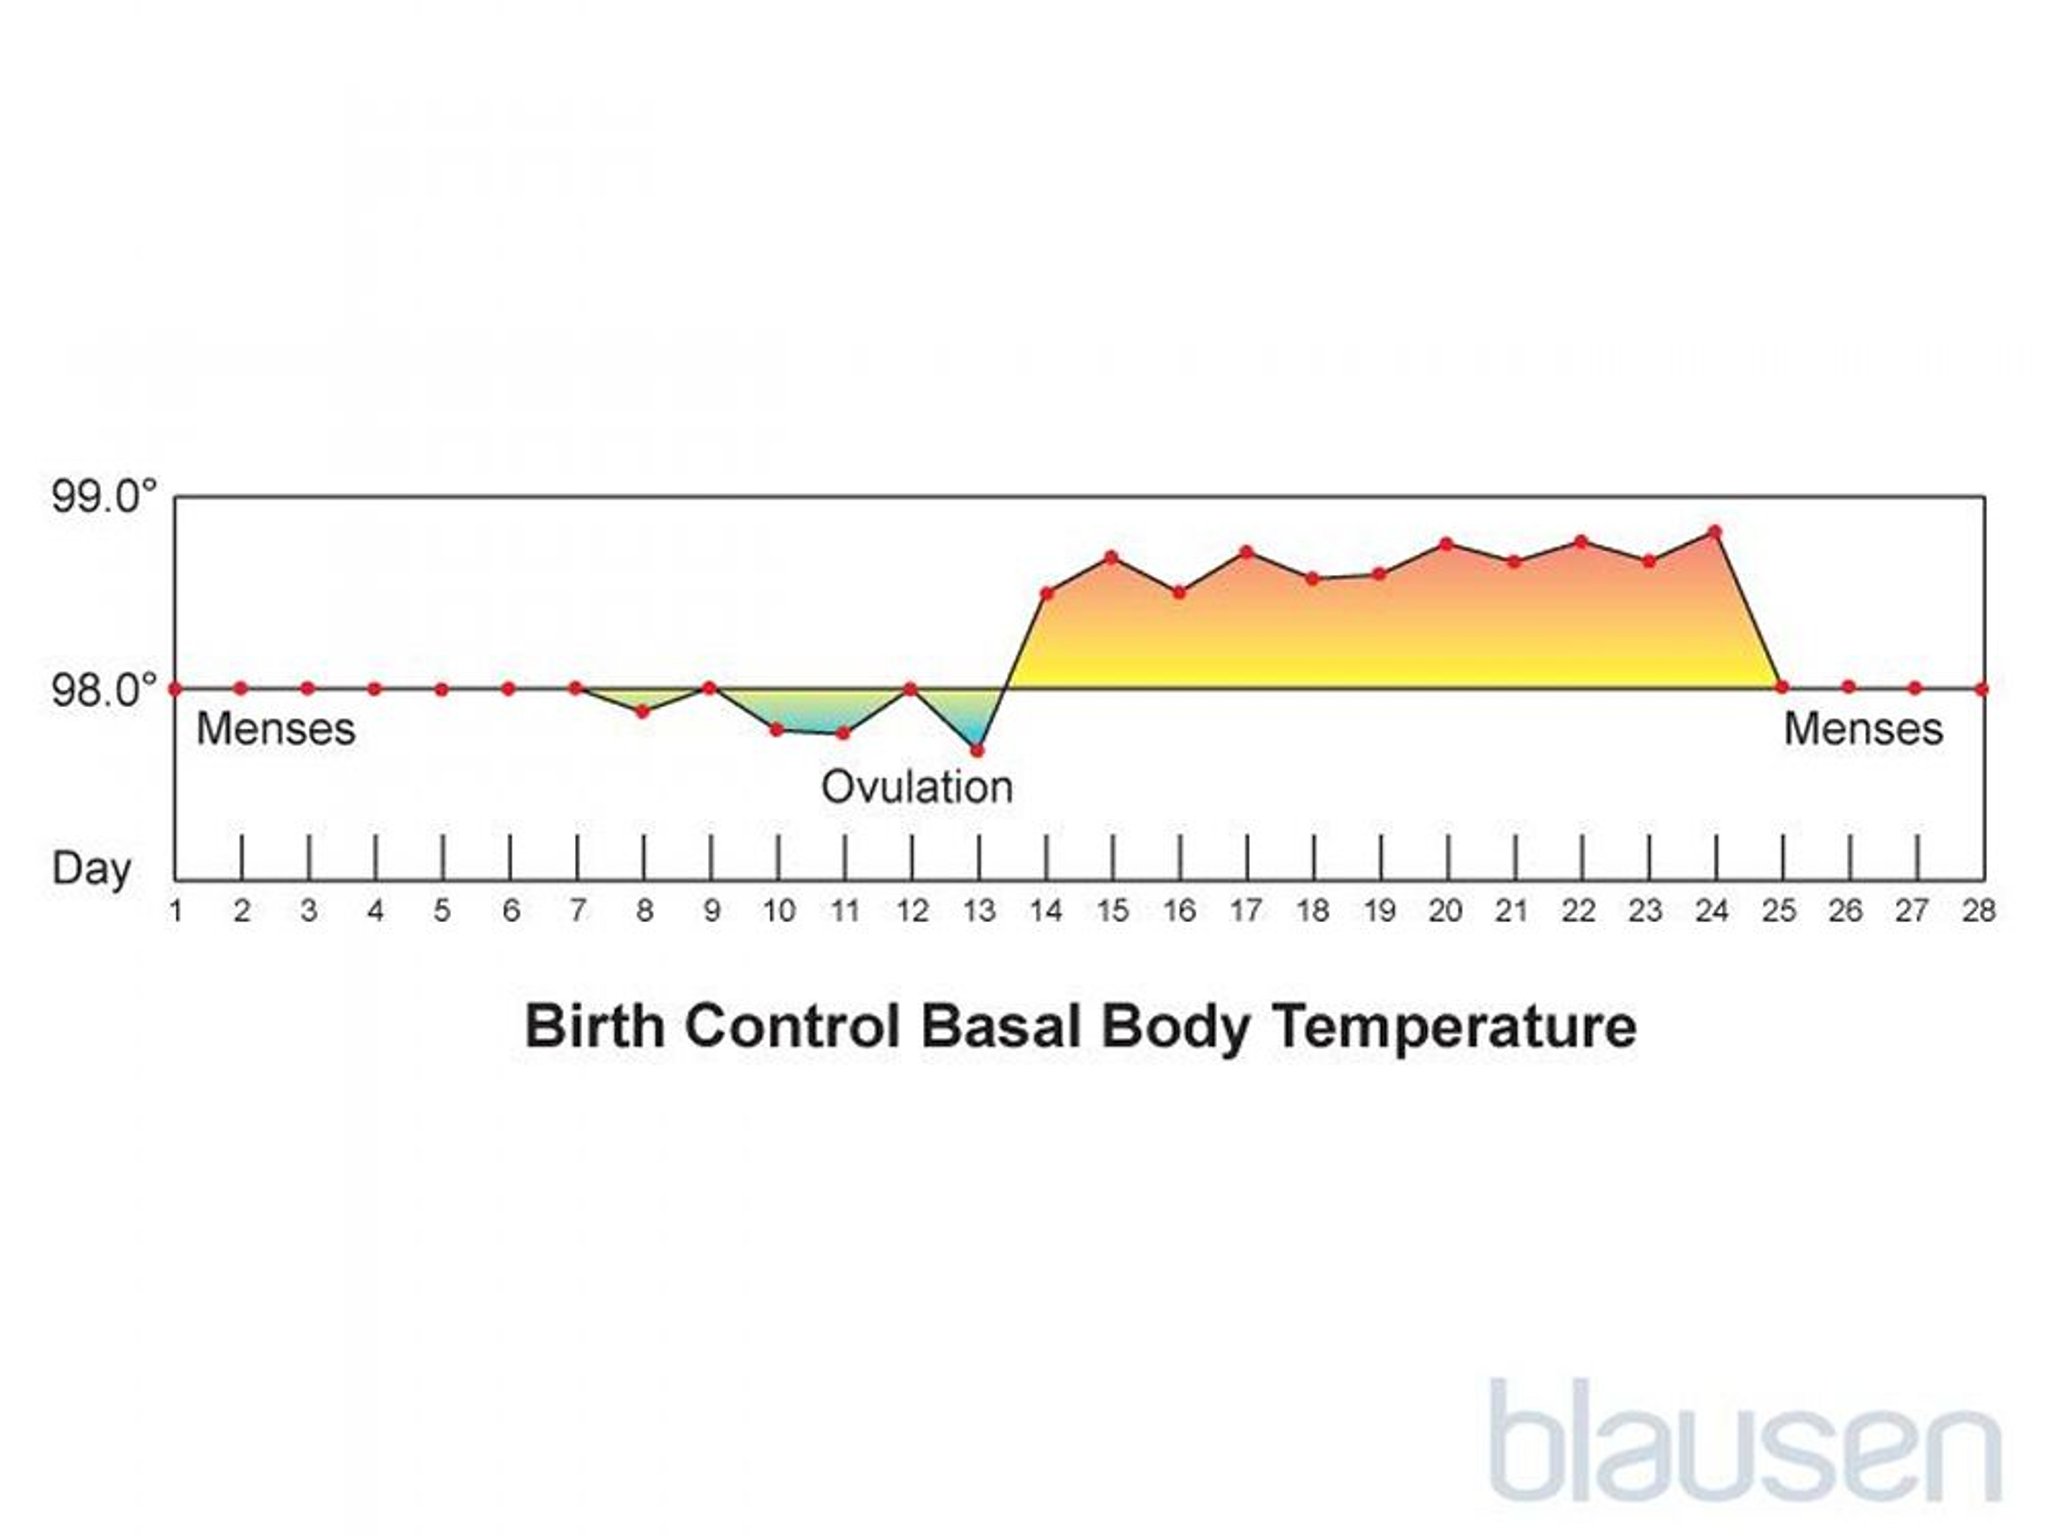 Temperatura corporal basal